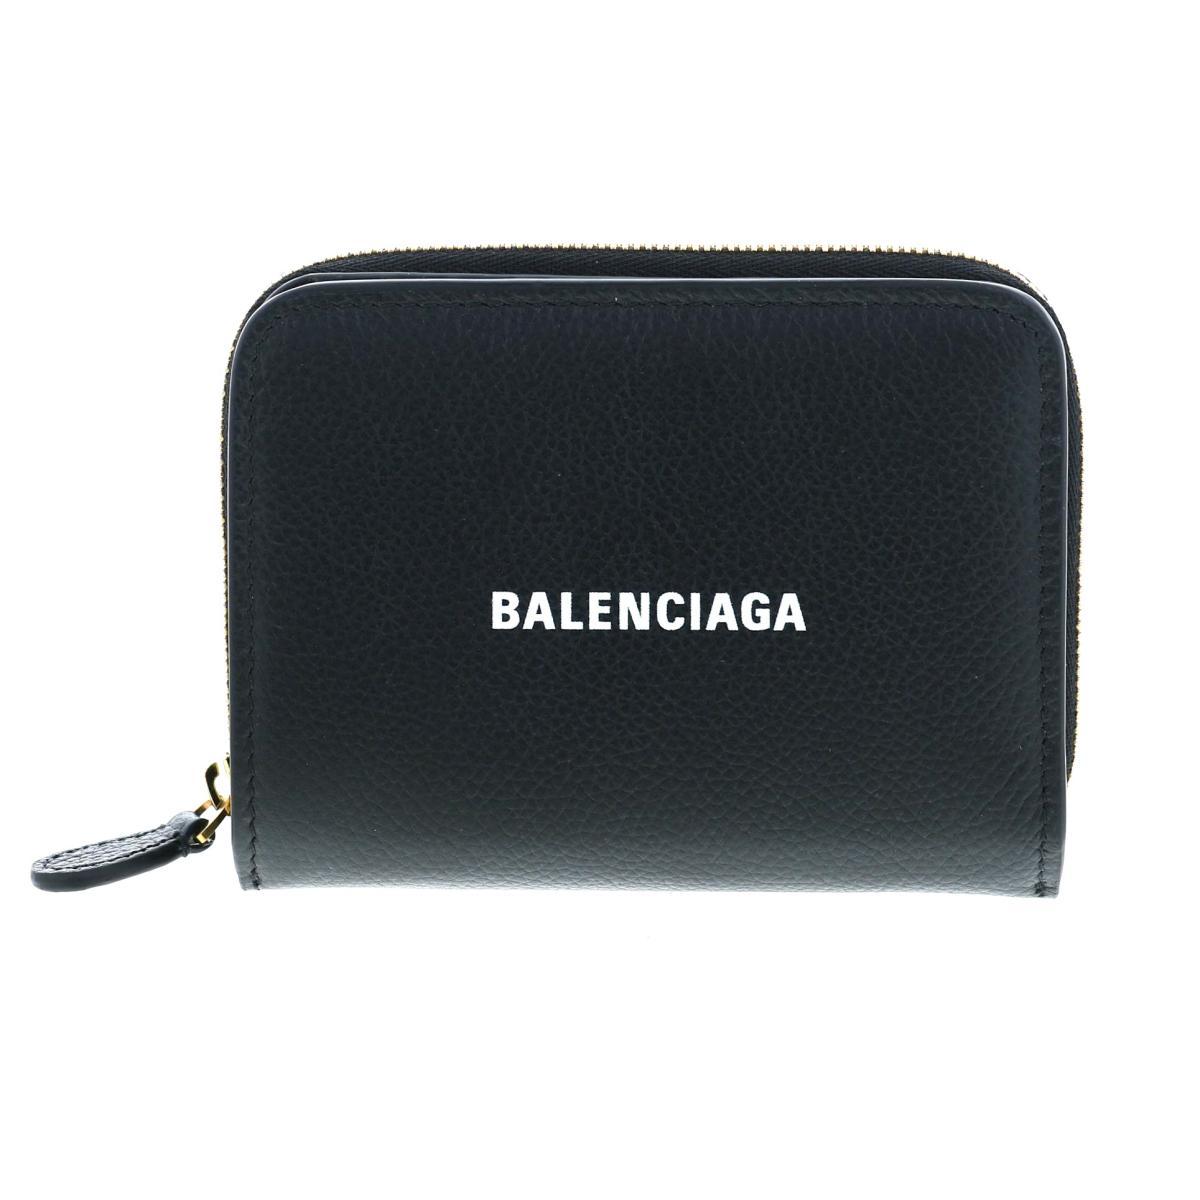 BALENCIAGA バレンシアガ 財布 二つ折り財布(小銭入有) 650871 Black Leather コンパクトウォレット